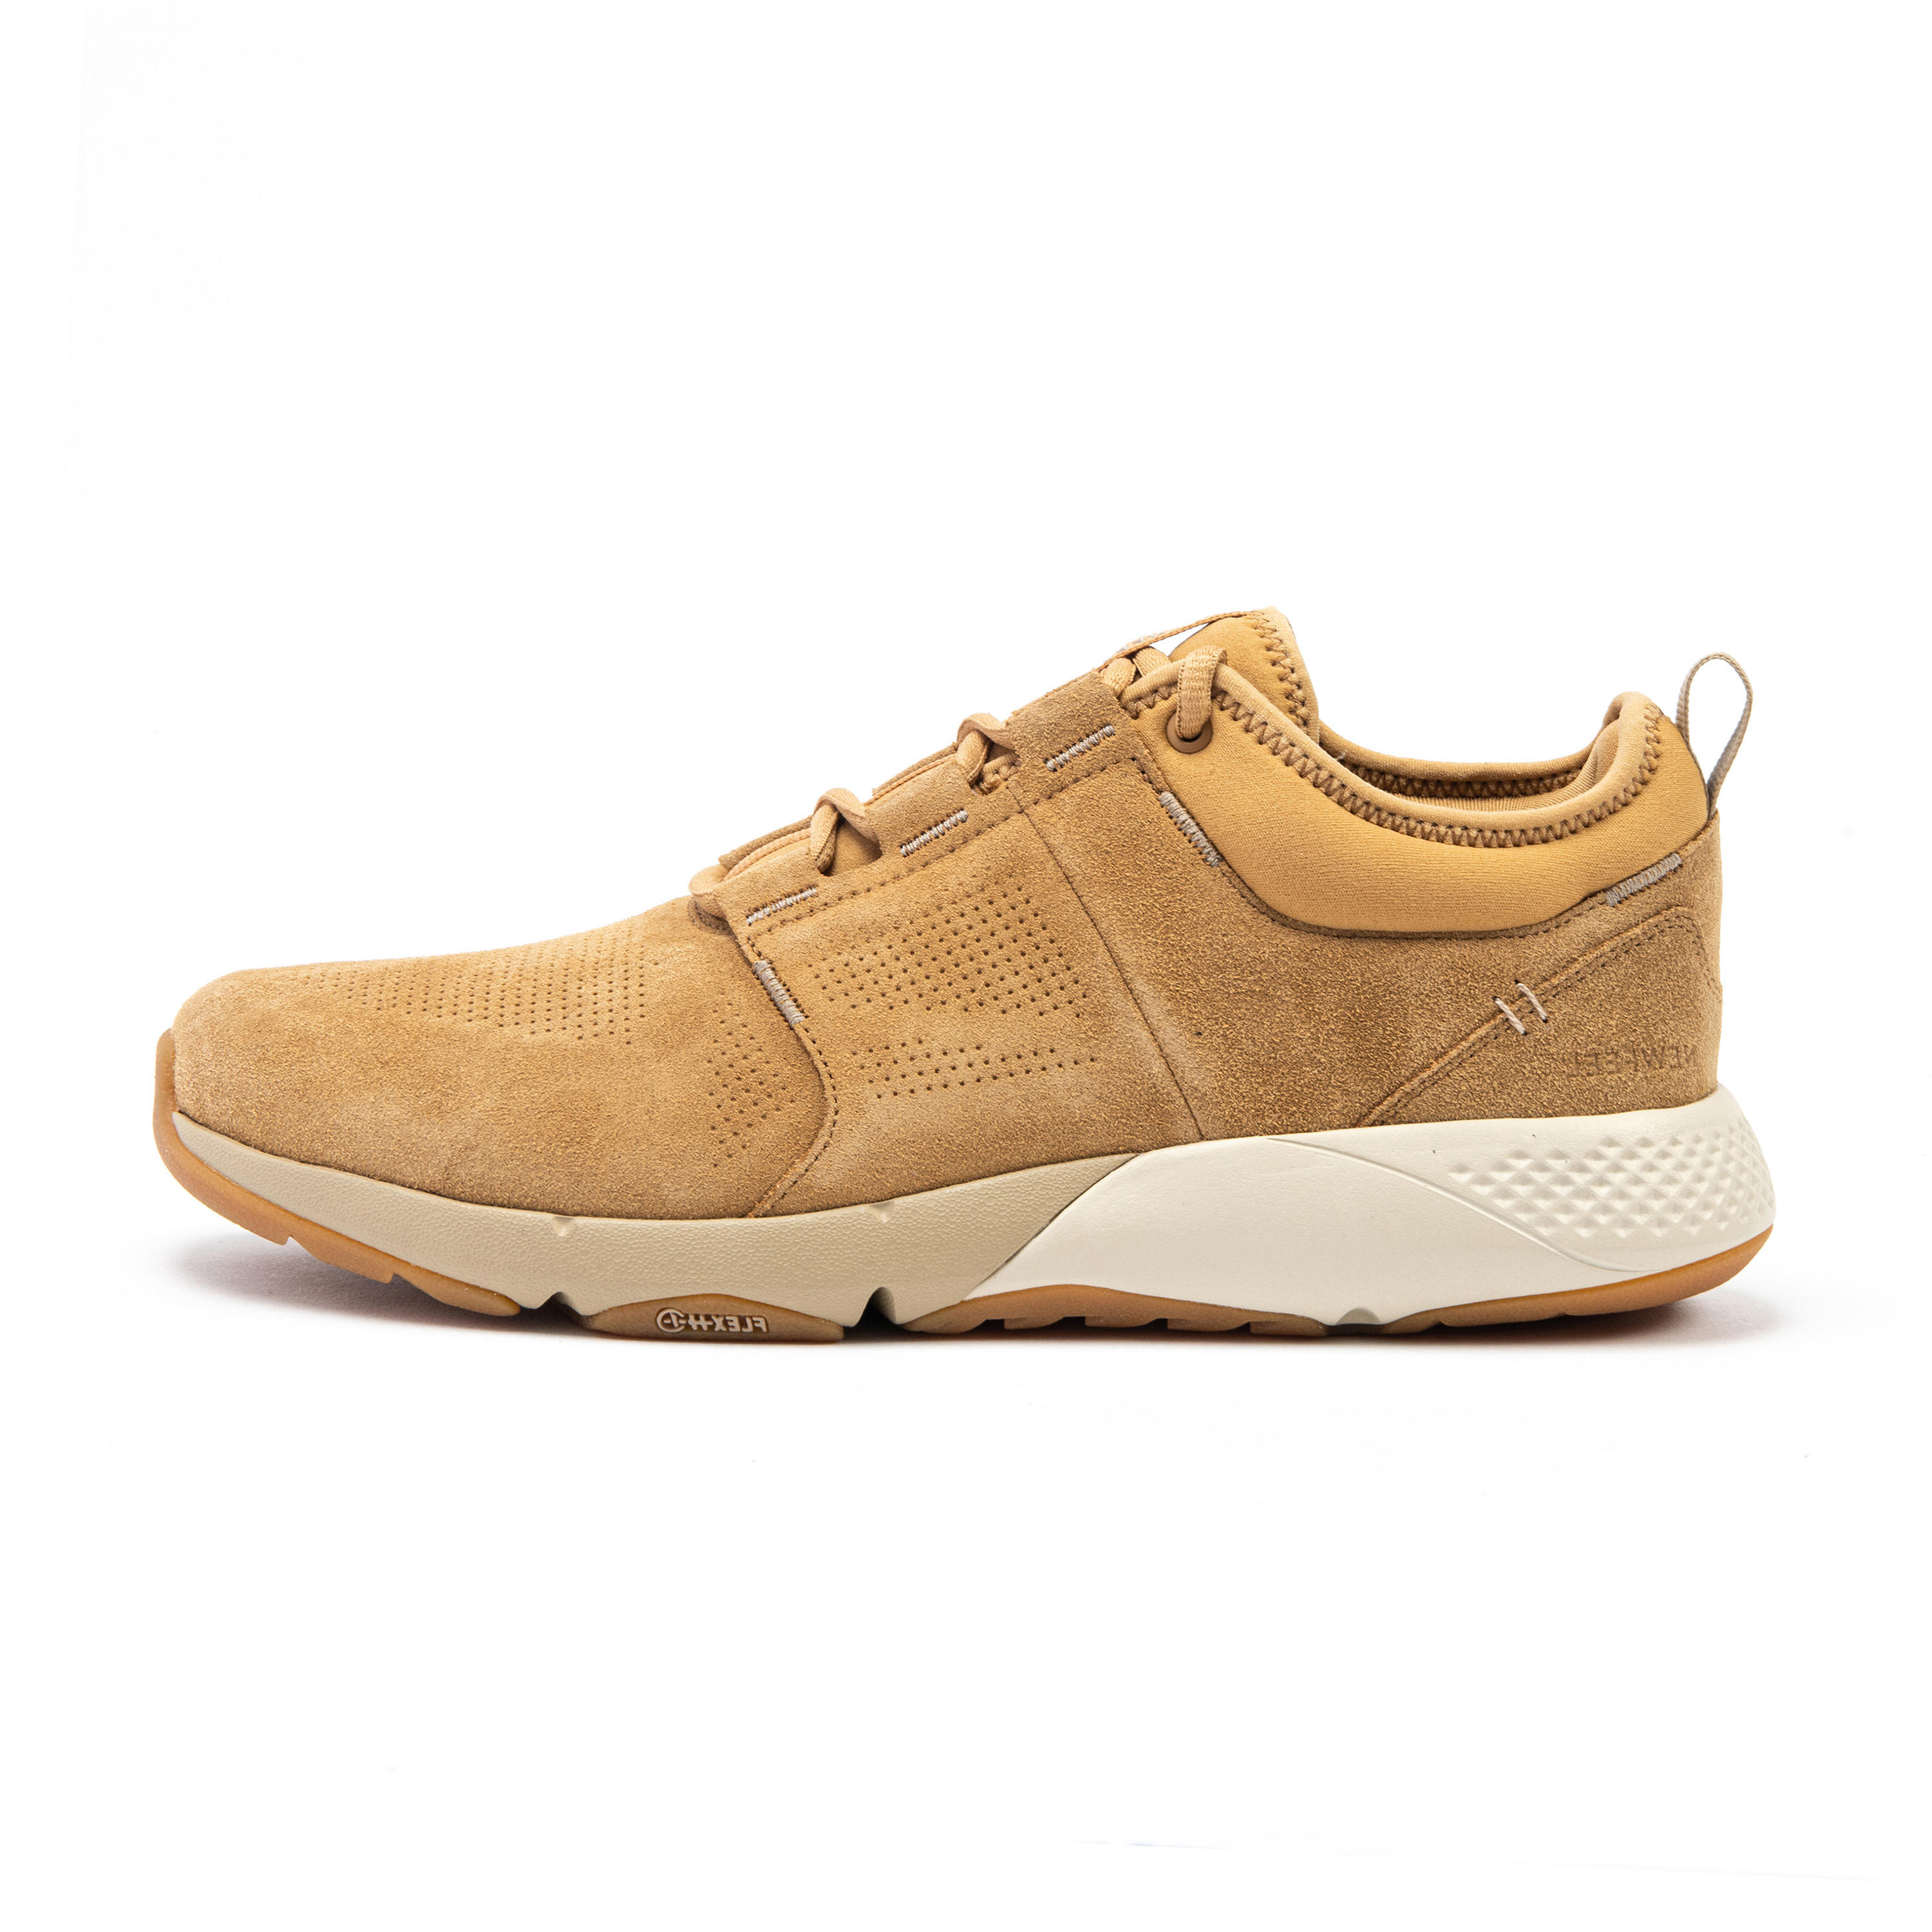 Actiwalk Comfort Leather Men's Urban Walking Shoes - Camel 2/43